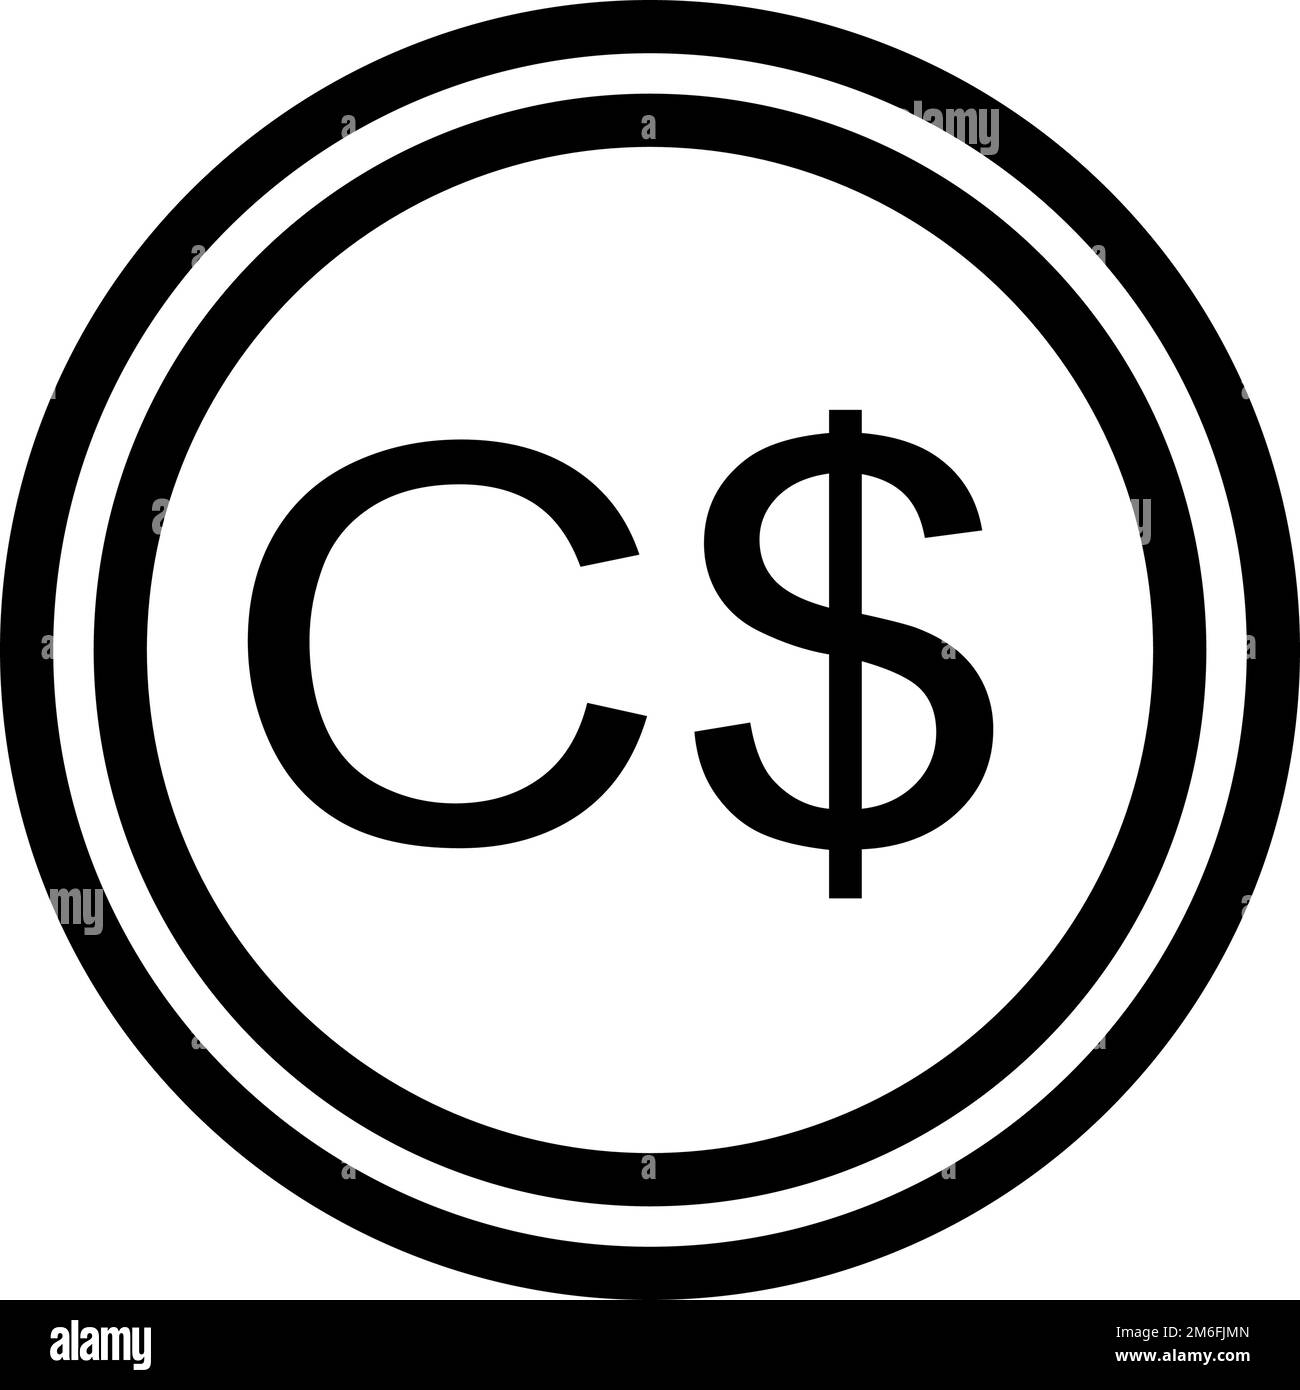 Simple Canadian dollar coin icon. Editable vector. Stock Vector